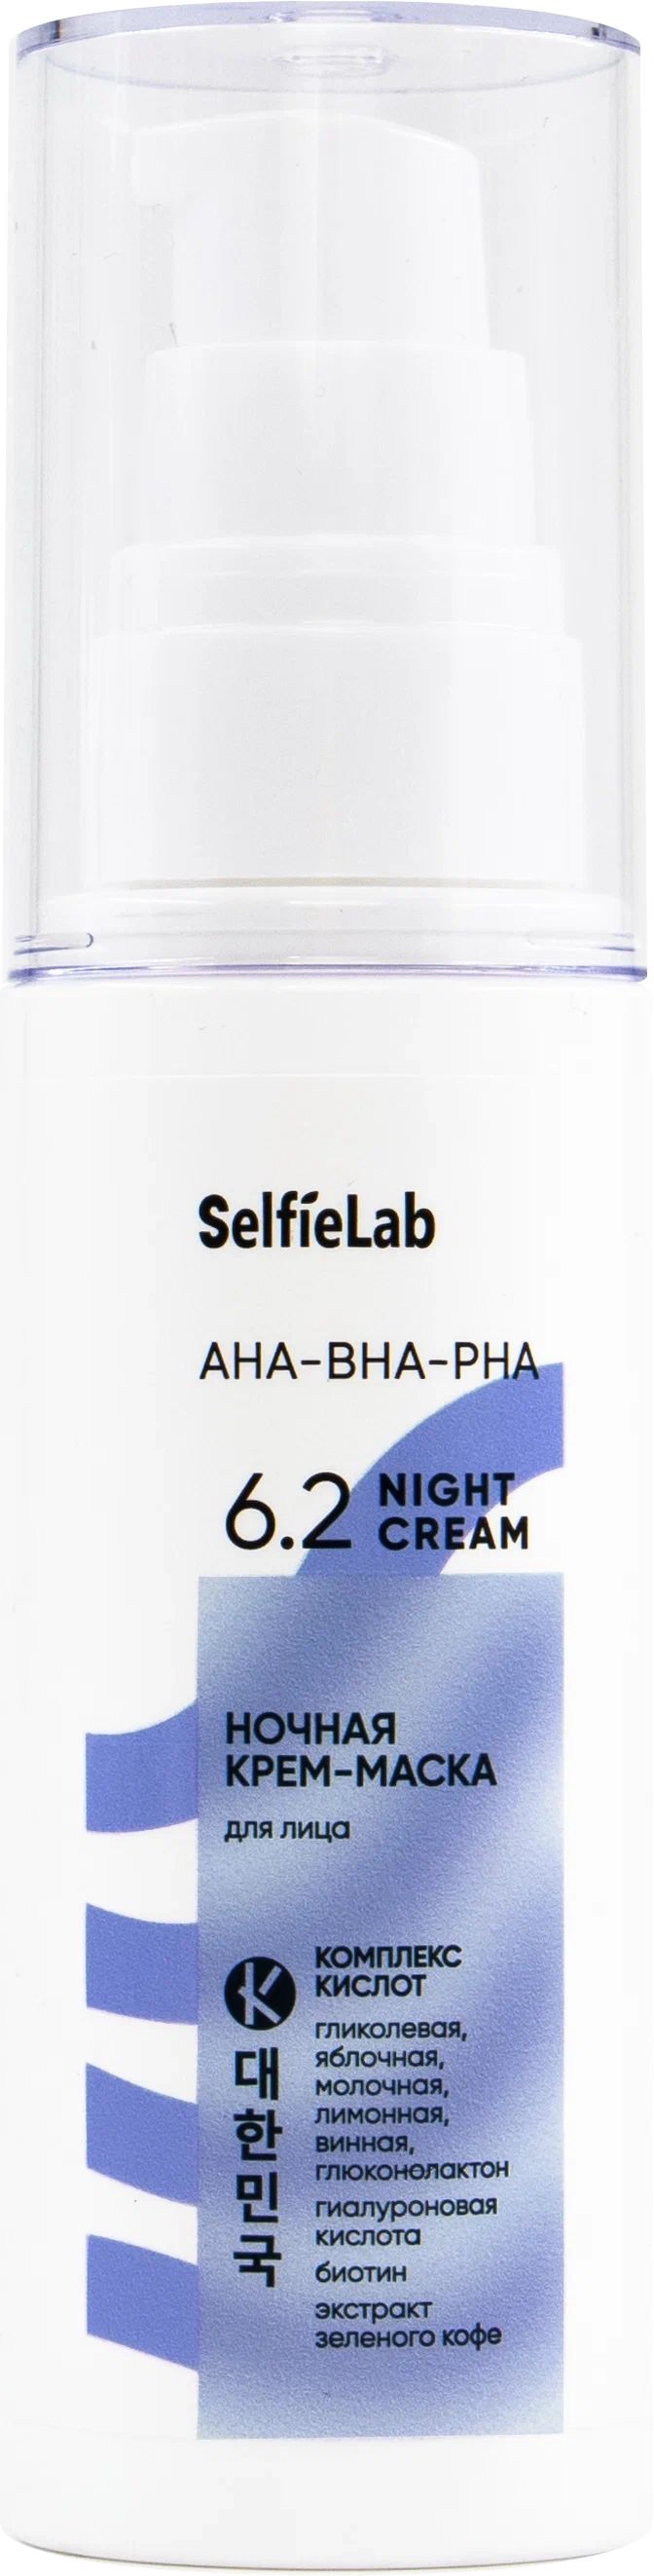 Маска-крем для лица SelfieLab AHA-BHA-PHA ночная 50 г edwin jagger крем для бритья aloe vera 75